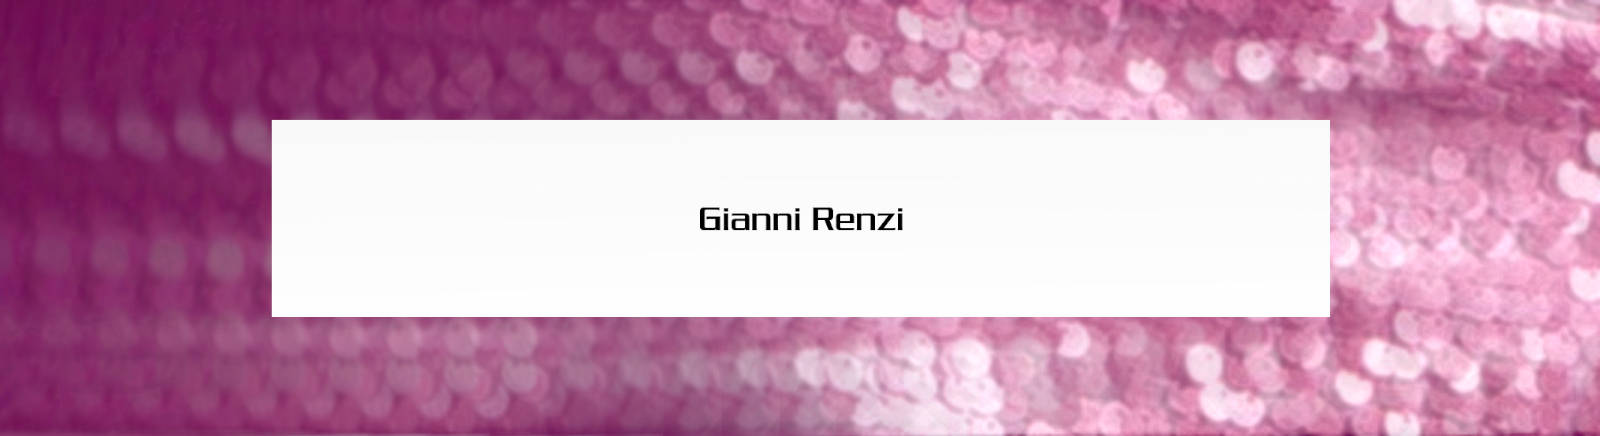 Prange: Gianni Renzi Pantoletten für Damen online shoppen